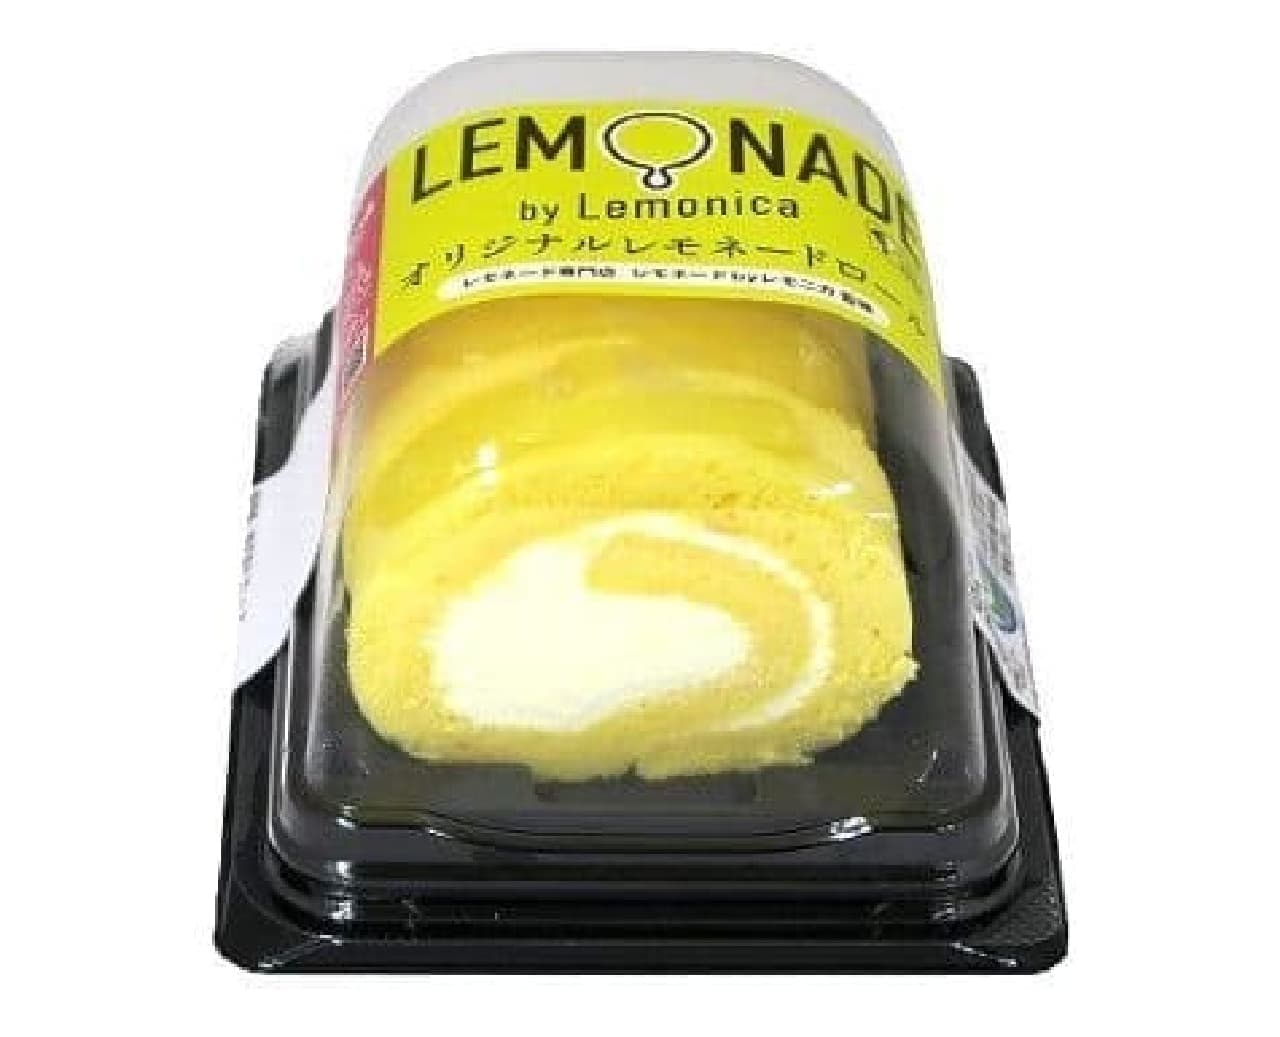 Original Lemonade Roll" supervised by Lemonade by Lemonica